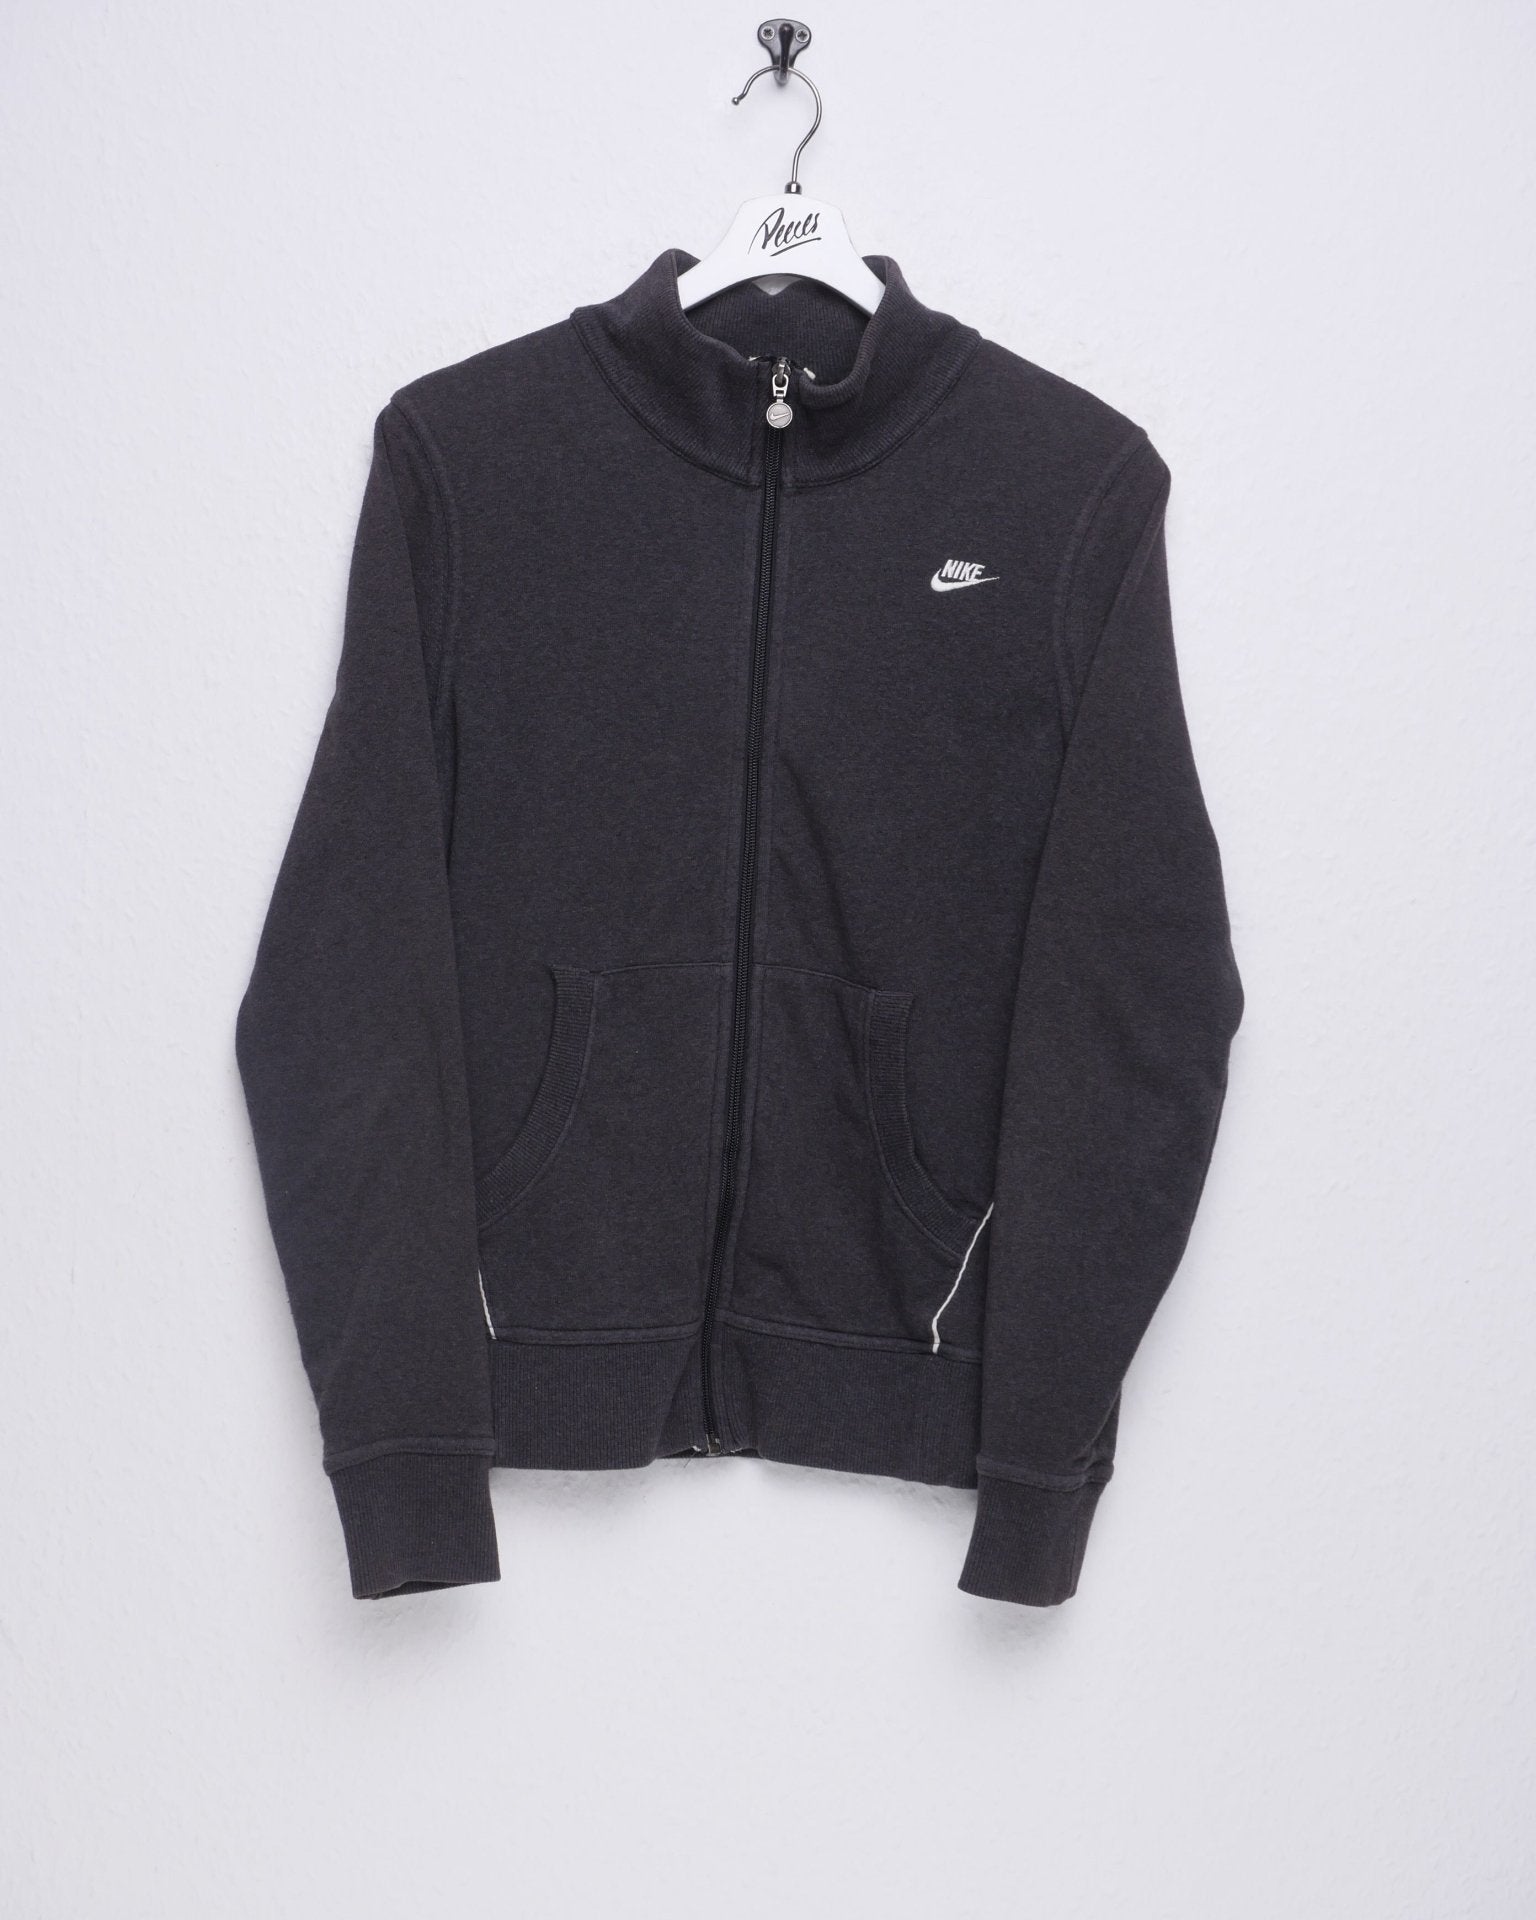 Nike embroidered Logo dark grey Zip Sweater - Peeces